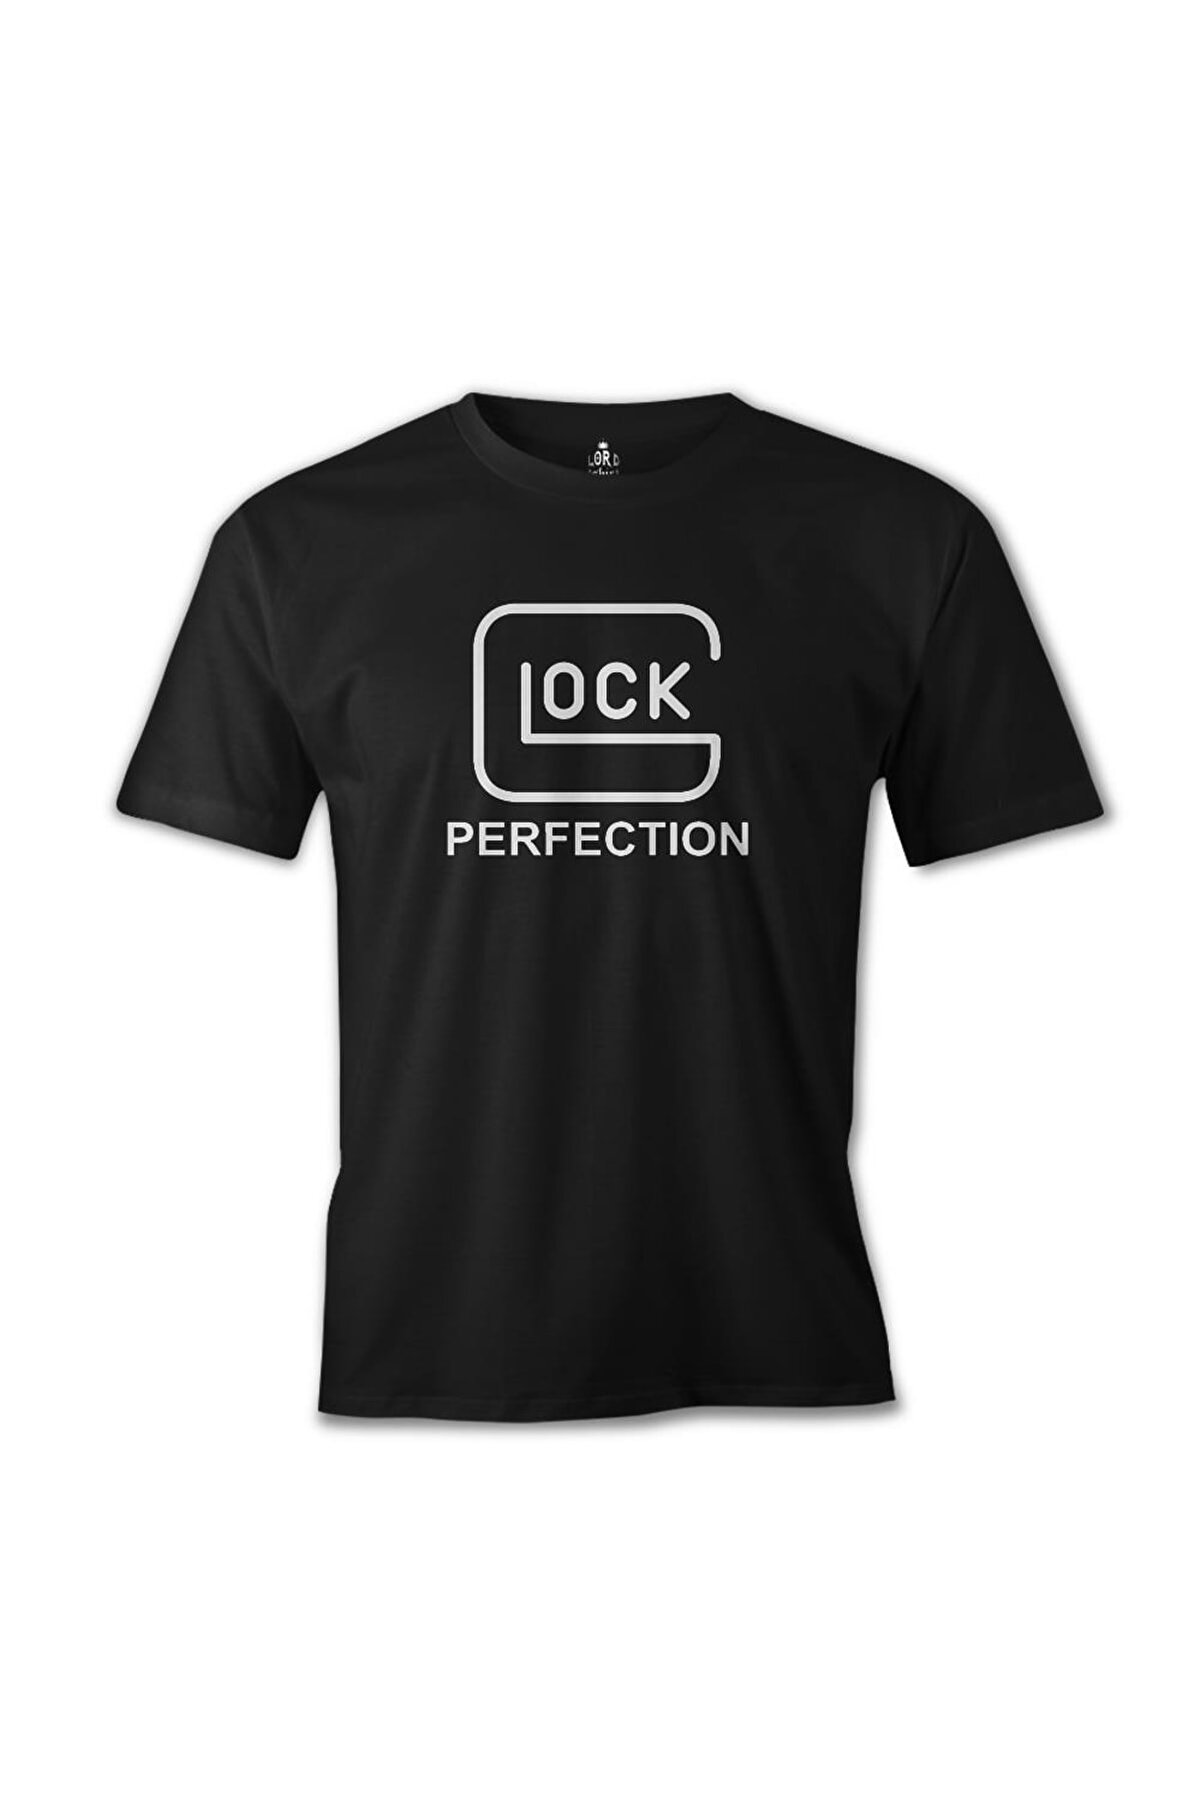 Lord T-Shirt Erkek Siyah Glock Perfection T-Shirt es-597